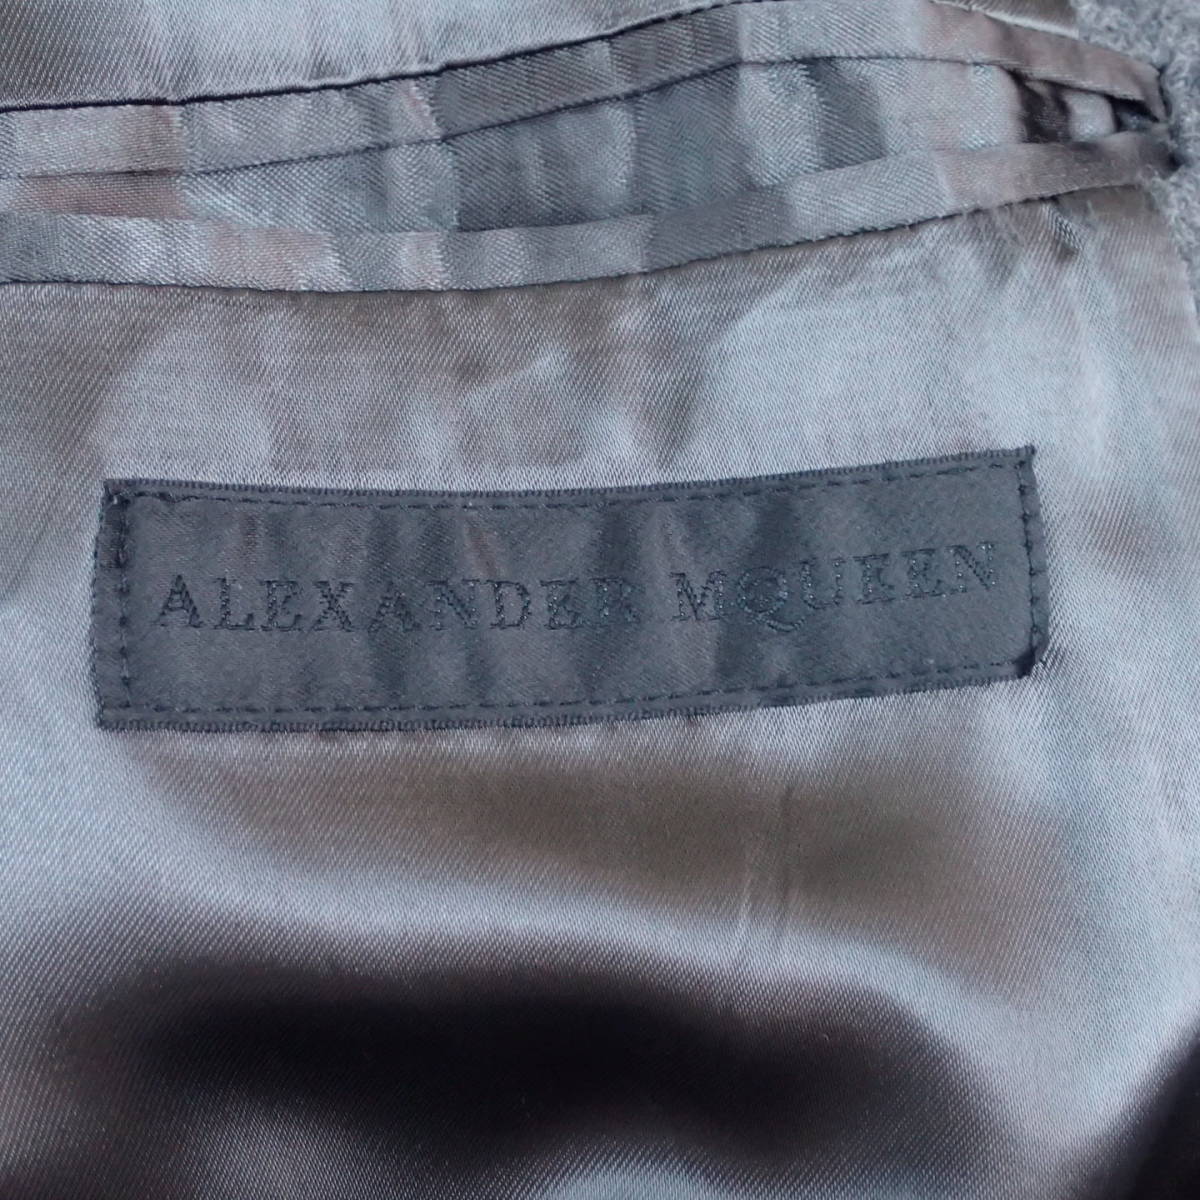 # ALEXANDER McQUEEN # Alexander McQueen 2007 AW collection model coat size 48 domestic regular goods bus Stop tag attaching 